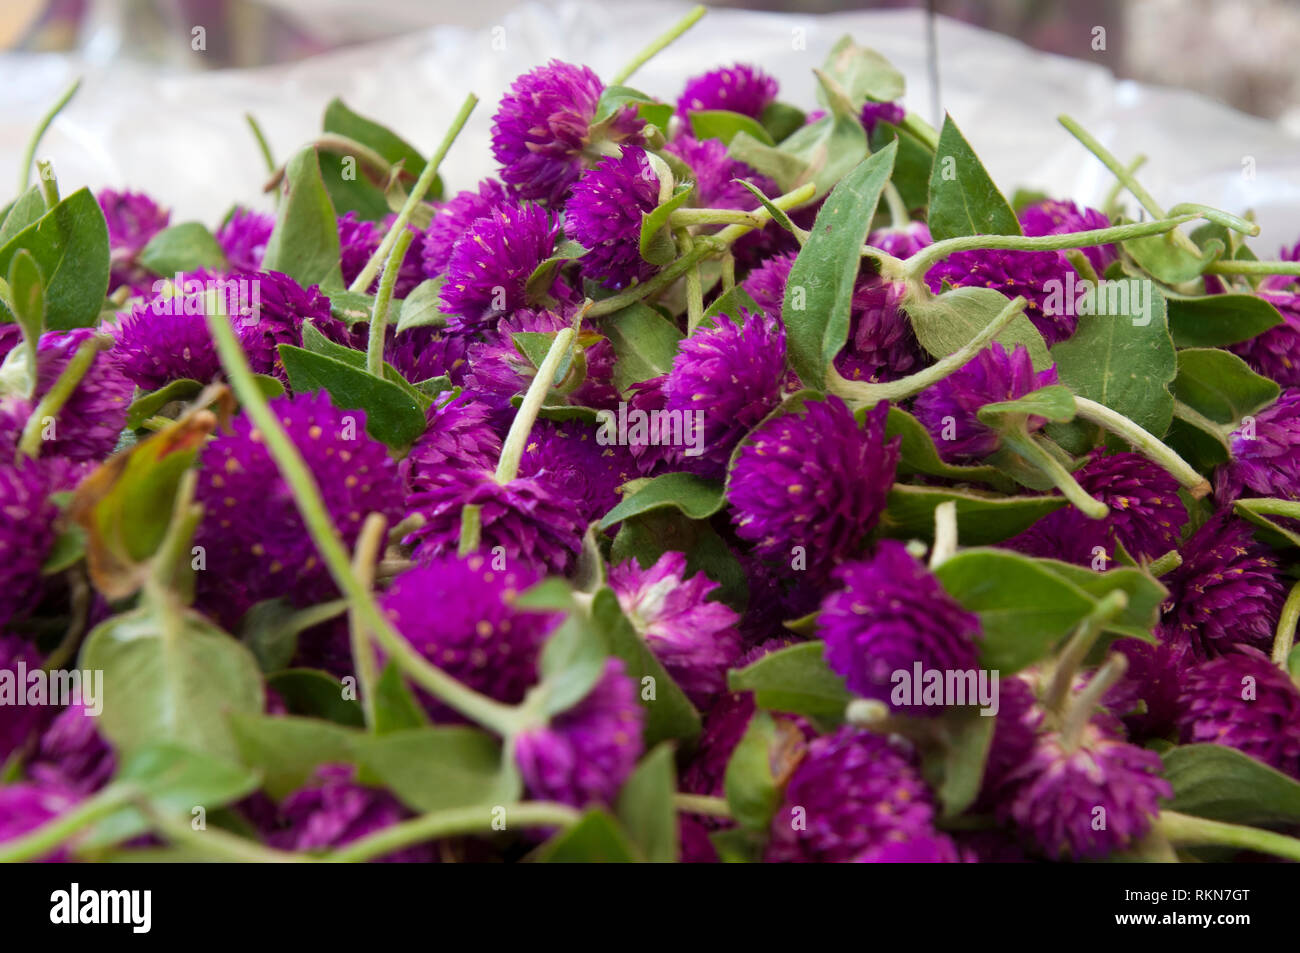 Bangkok in Thailandia, Pak Khlong Talat stallo del mercato close-up del globo viola amaranto per la vendita Foto Stock